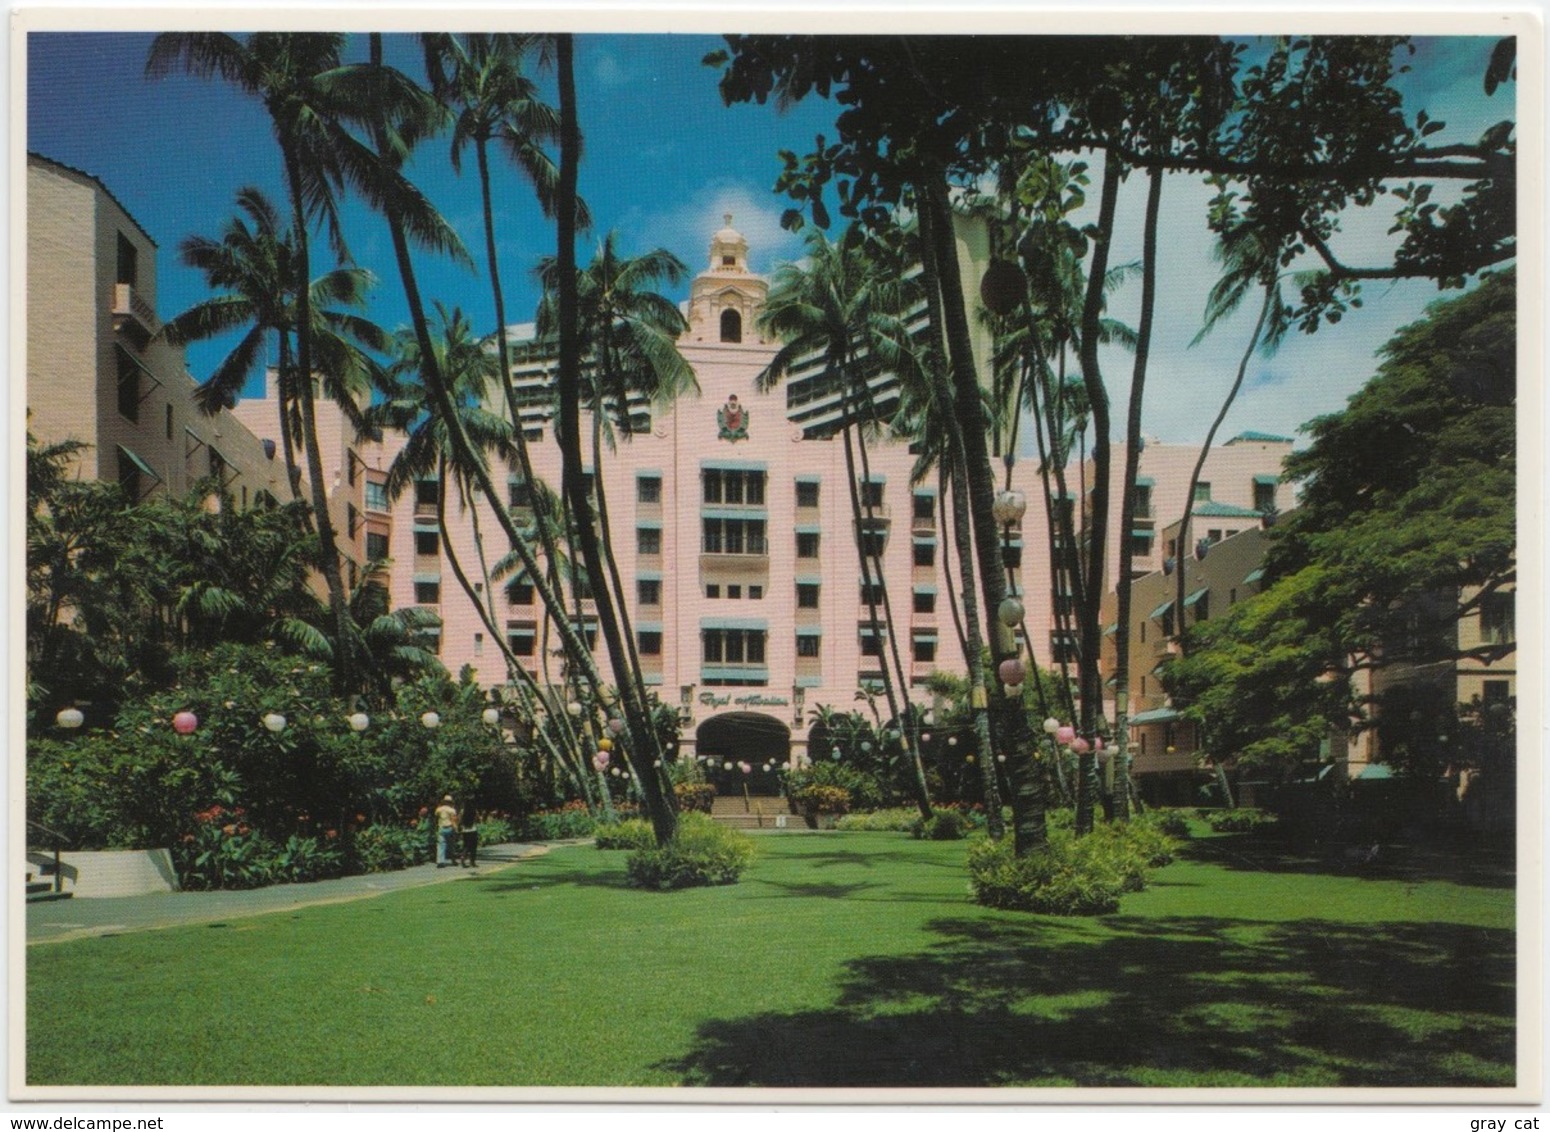 ROYAL HAWAIIAN HOTEL, Island Of Oahu, Unused Postcard [20994] - Oahu